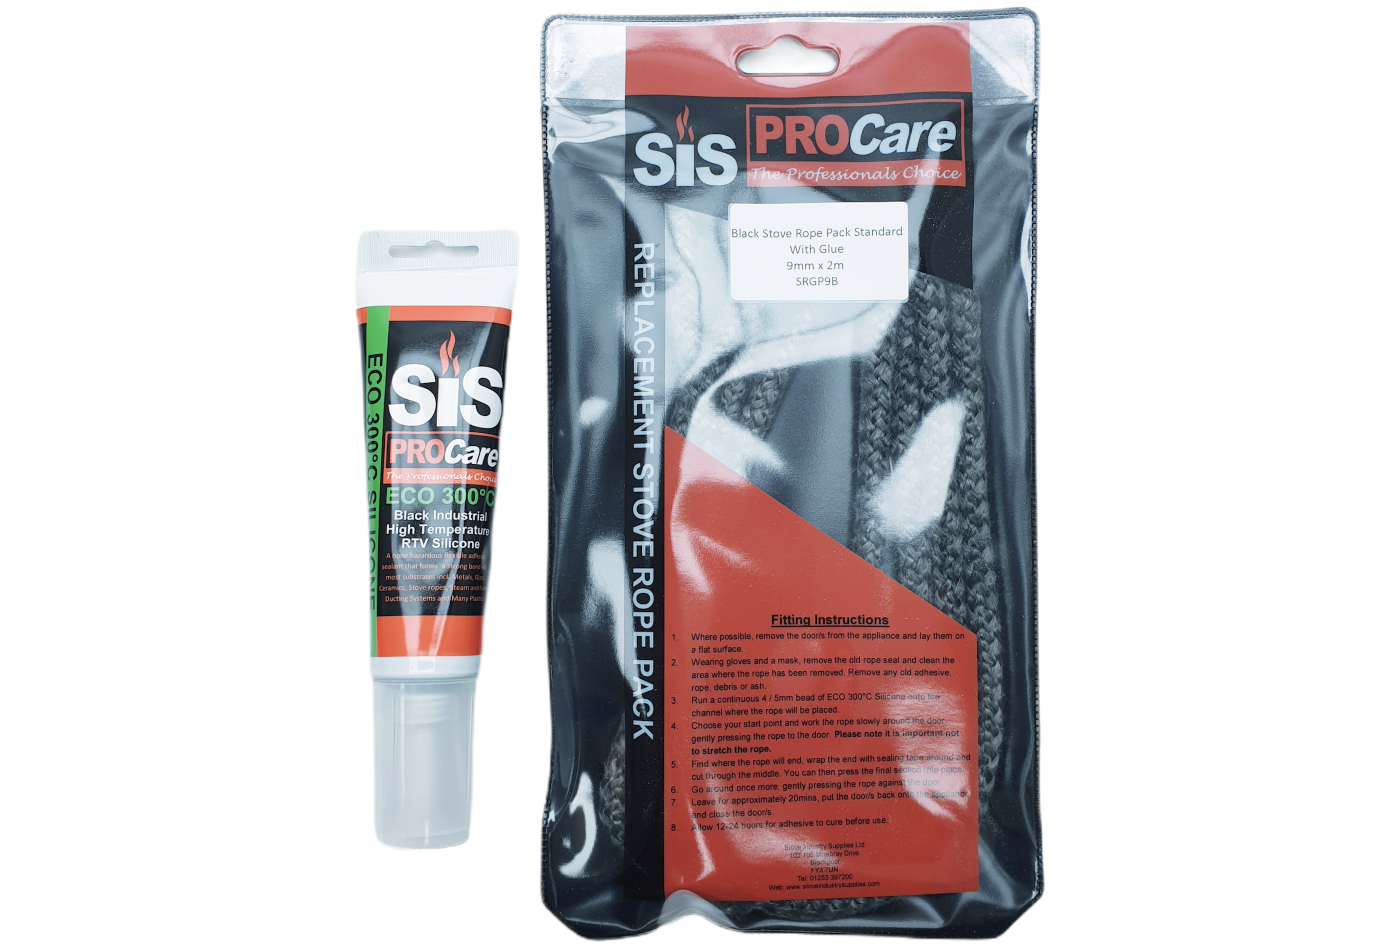 SiS Procare Black 9 milimetre x 2 metre Black Standard Stove Rope & 80 millilitre Rope Glue Pack - product code SRGP9B